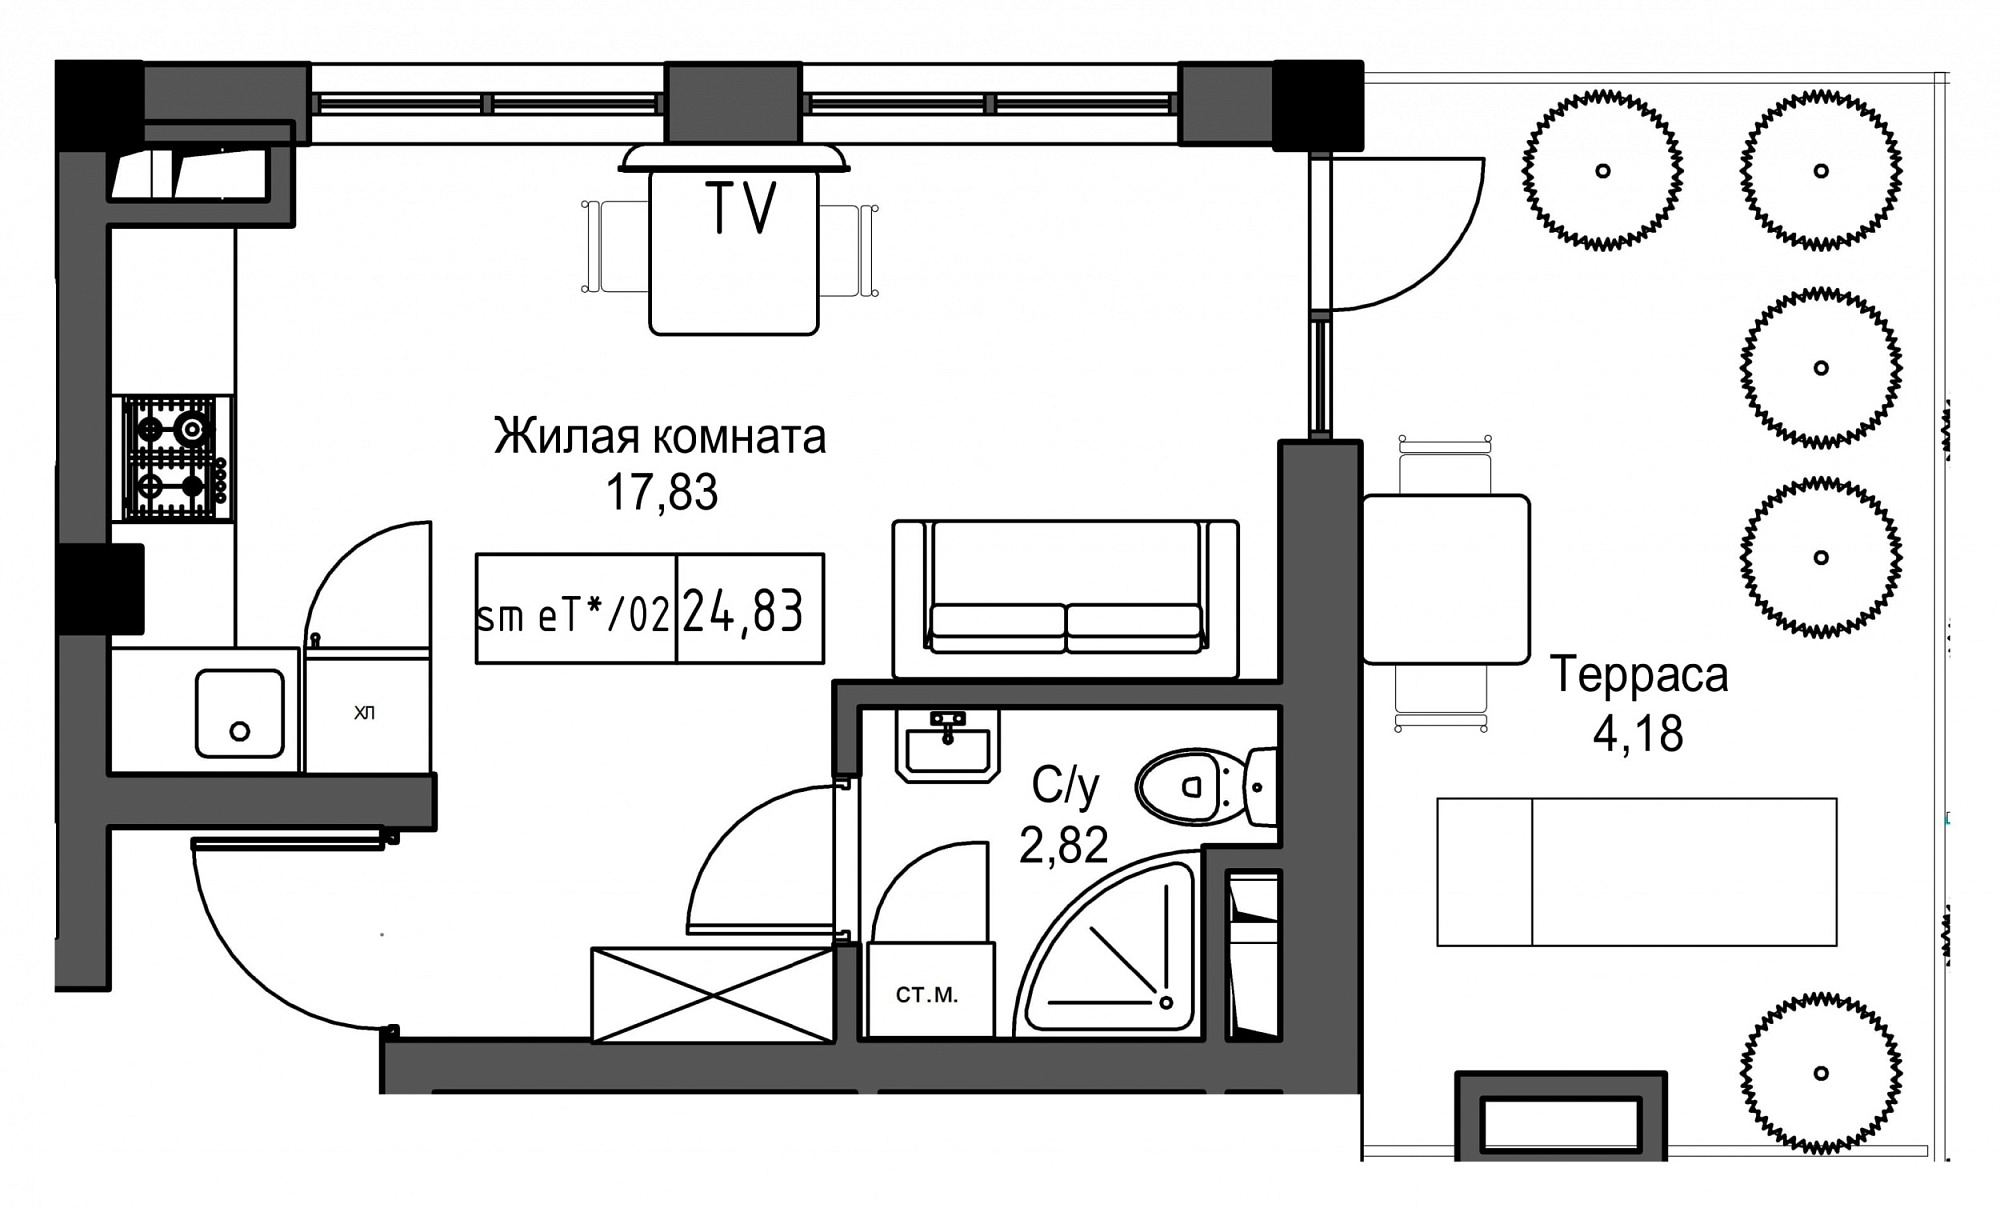 Планування Smart-квартира площею 24.83м2, UM-002-05/0044.